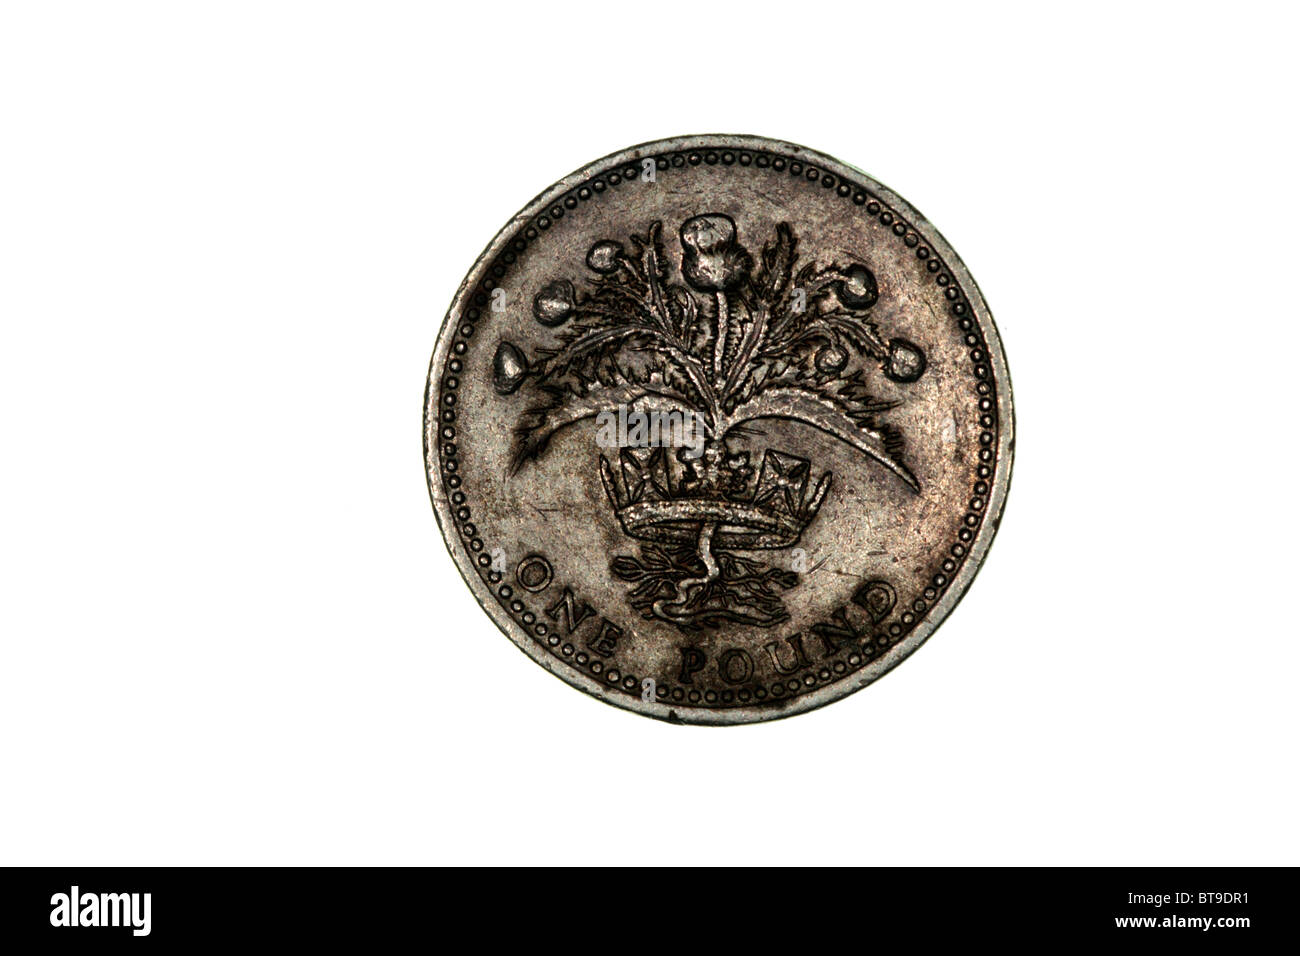 Pound coin design Scotland Stock Photo